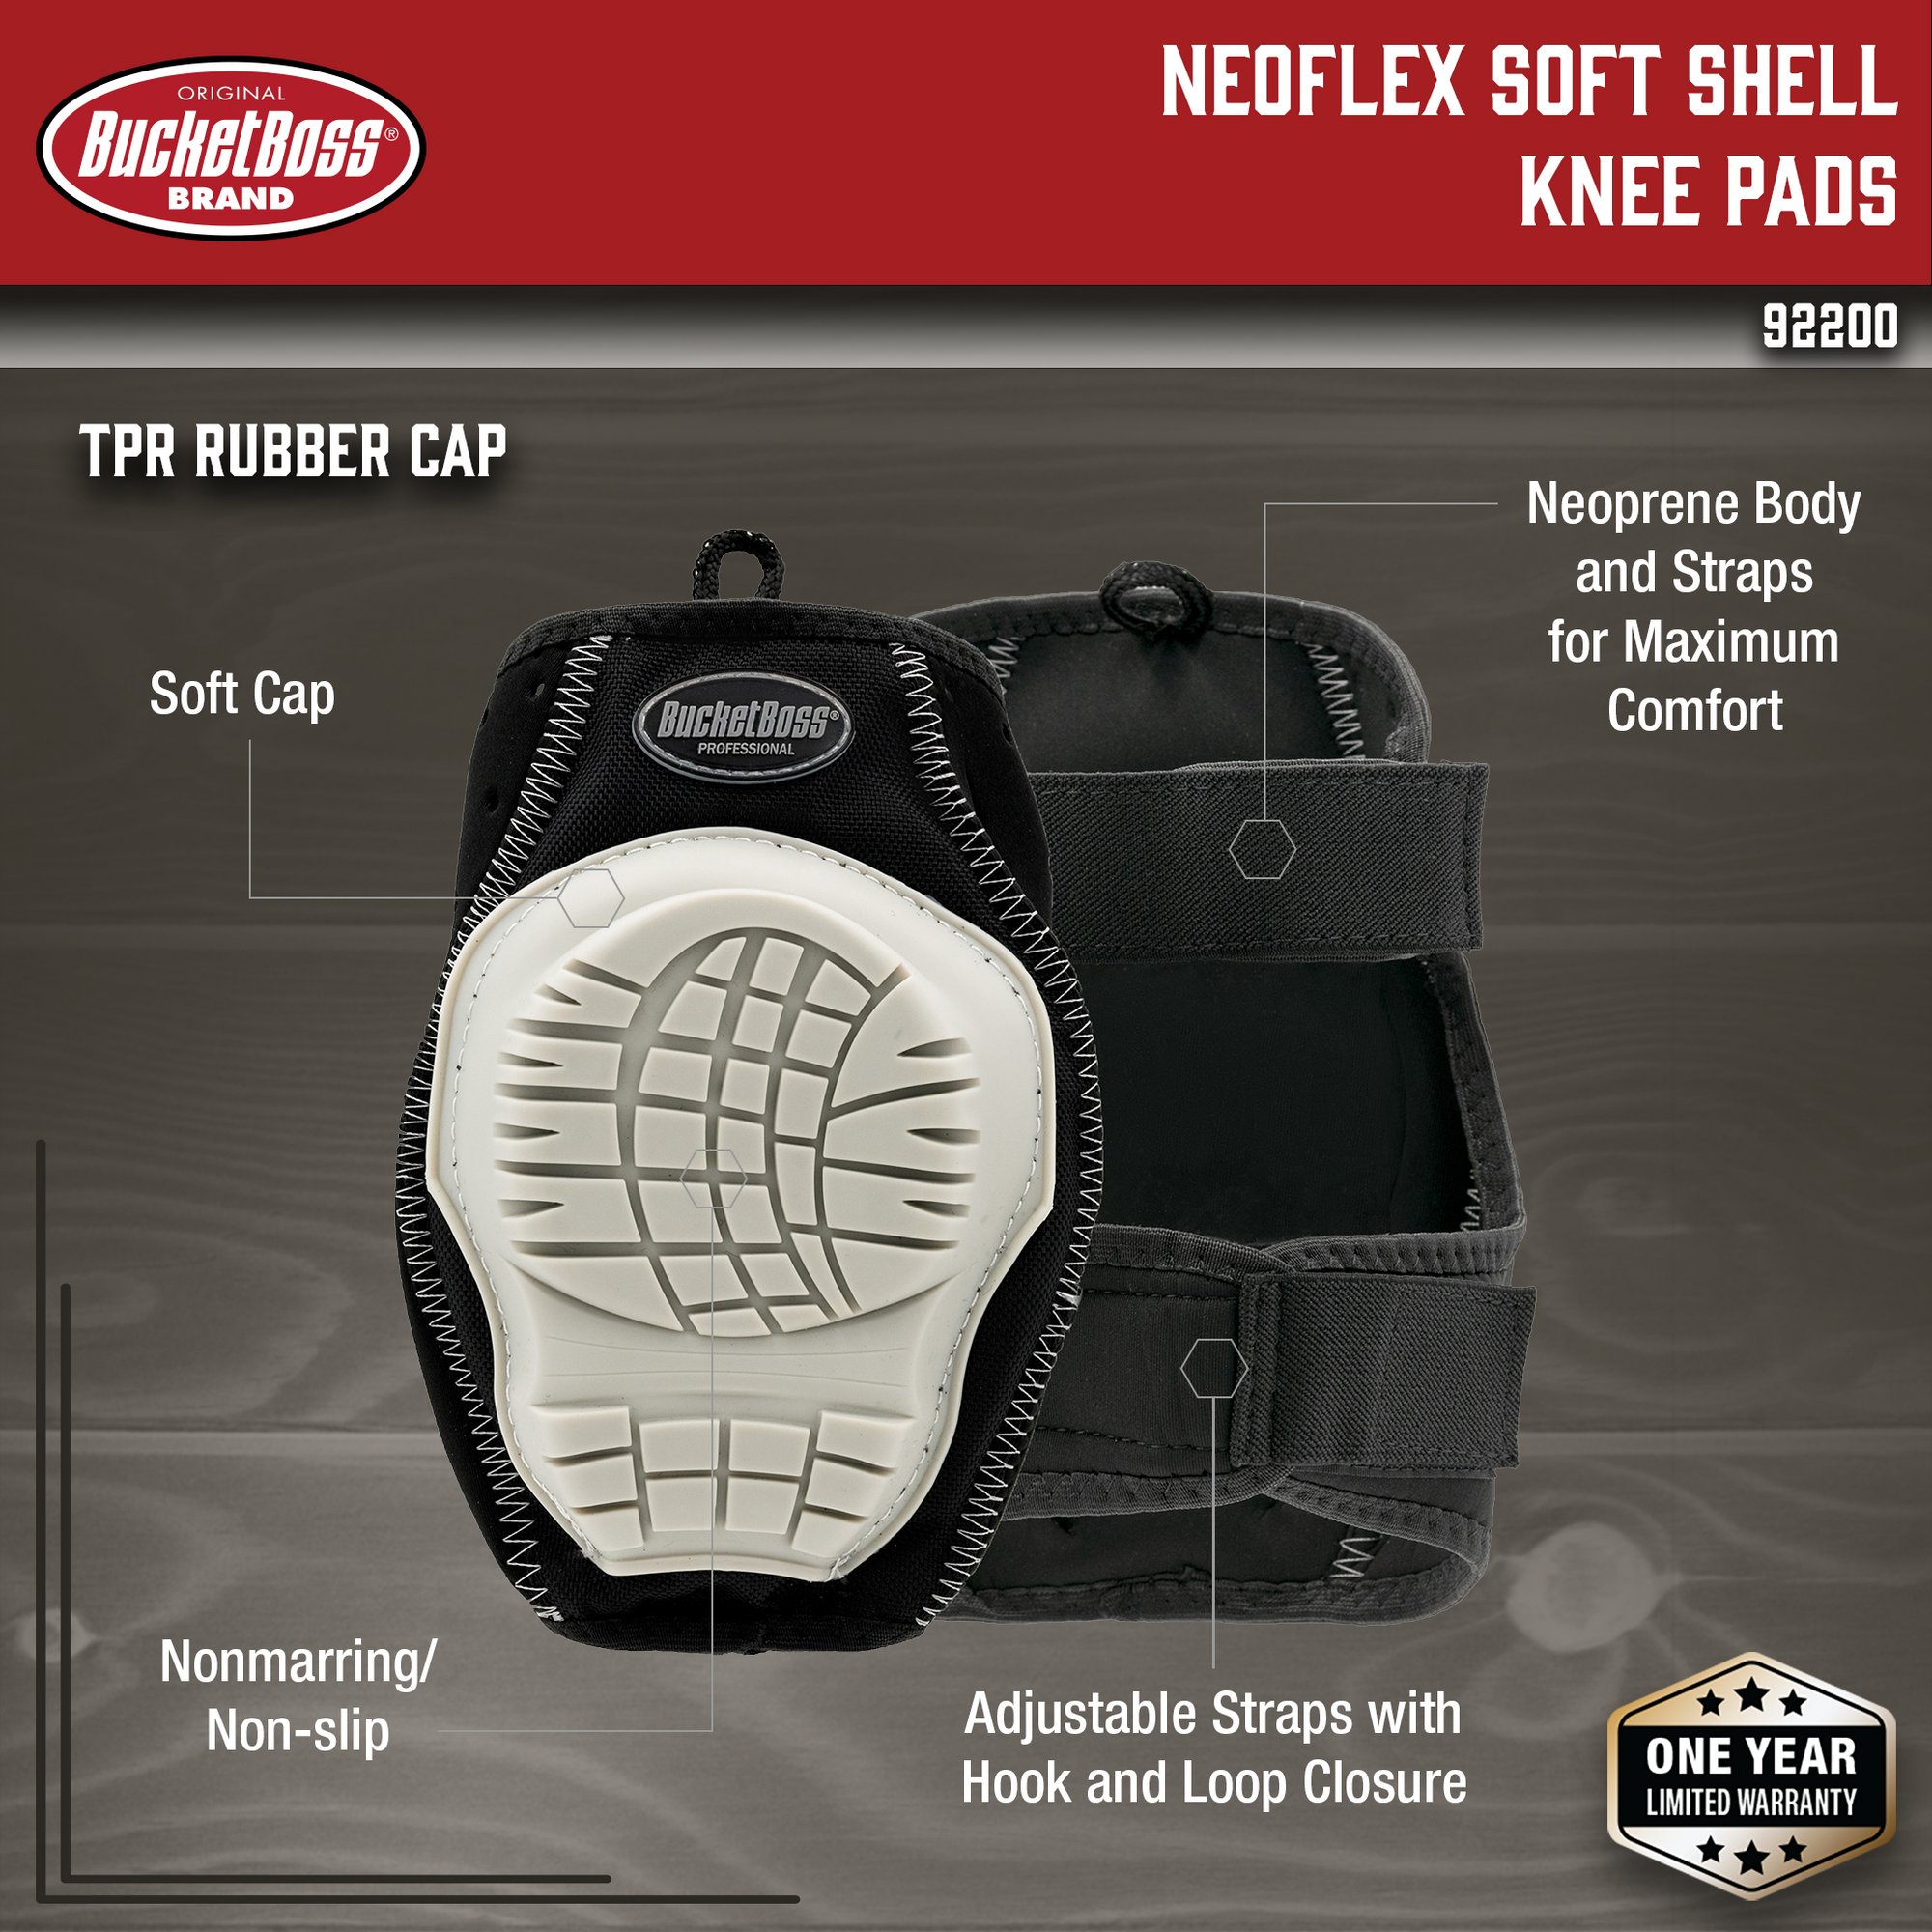 NeoFlex Soft Shell Knee Pads